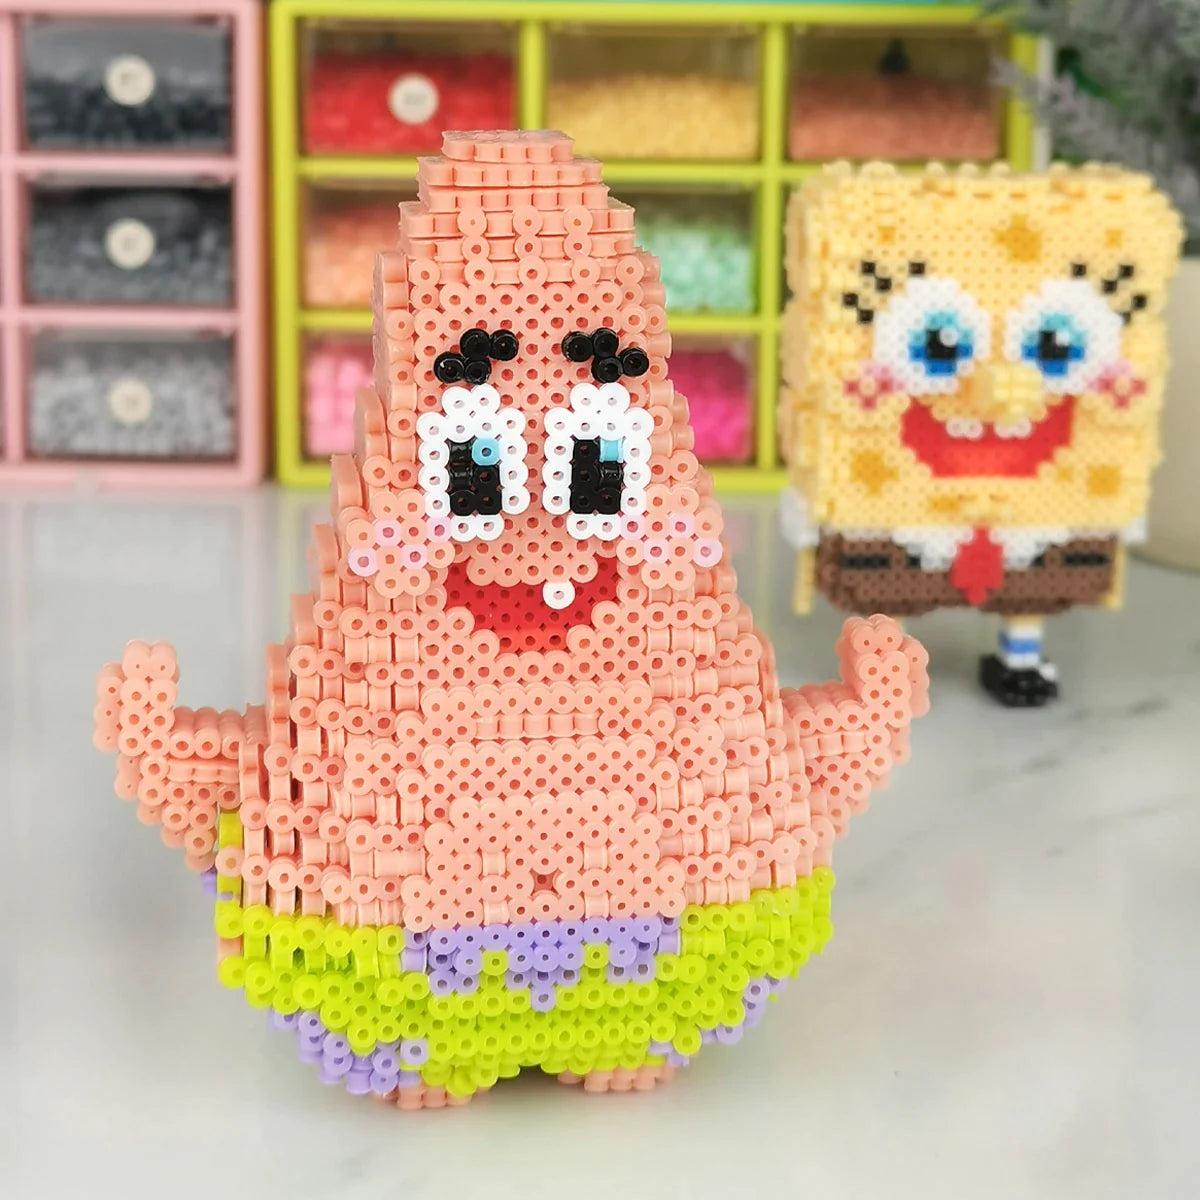 artkal beads 3d spongebob patrick star